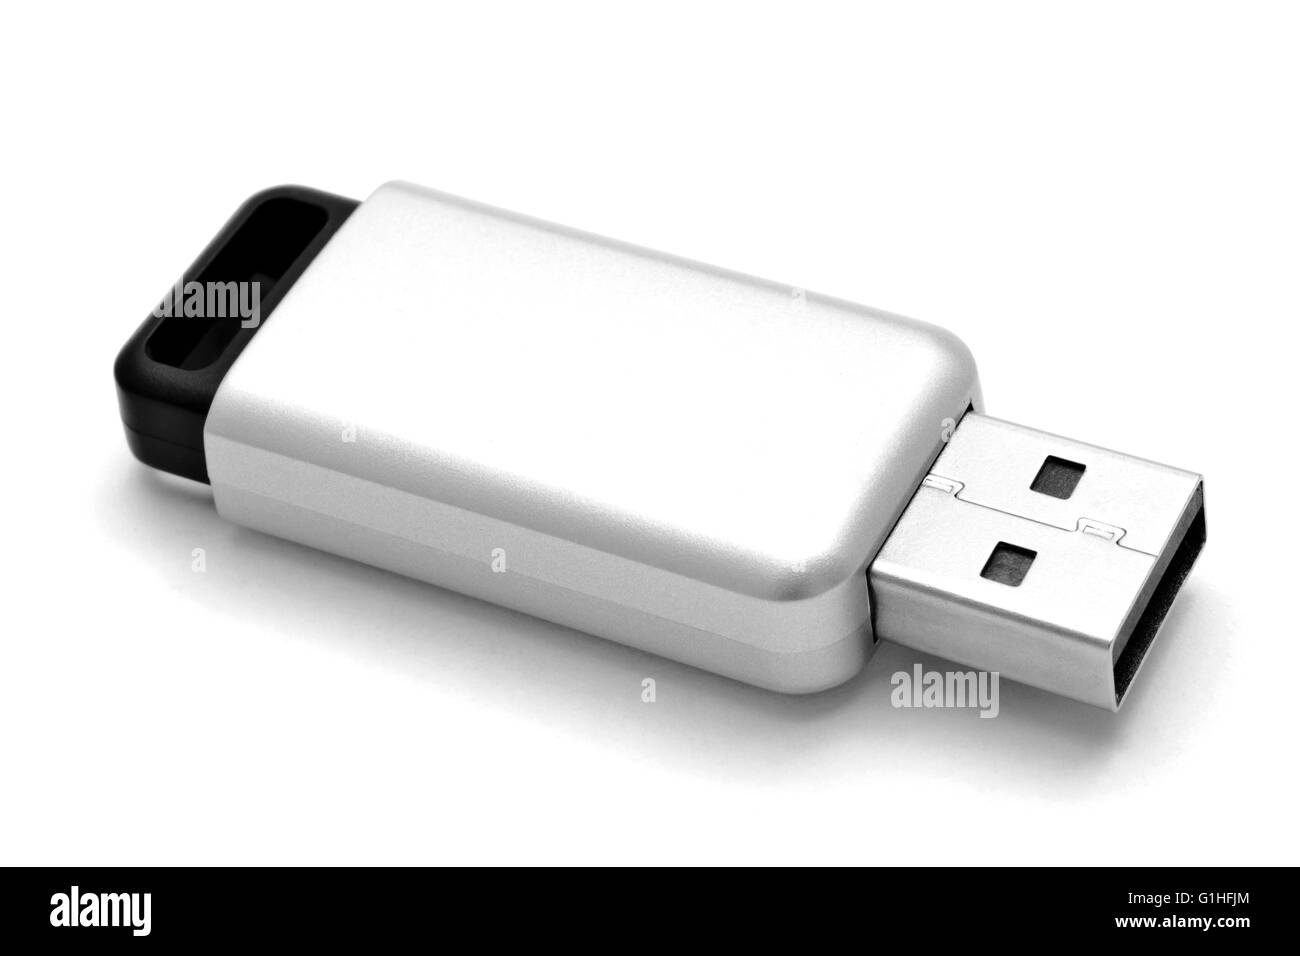 USB Flash Drive closuep on white background Stock Photo